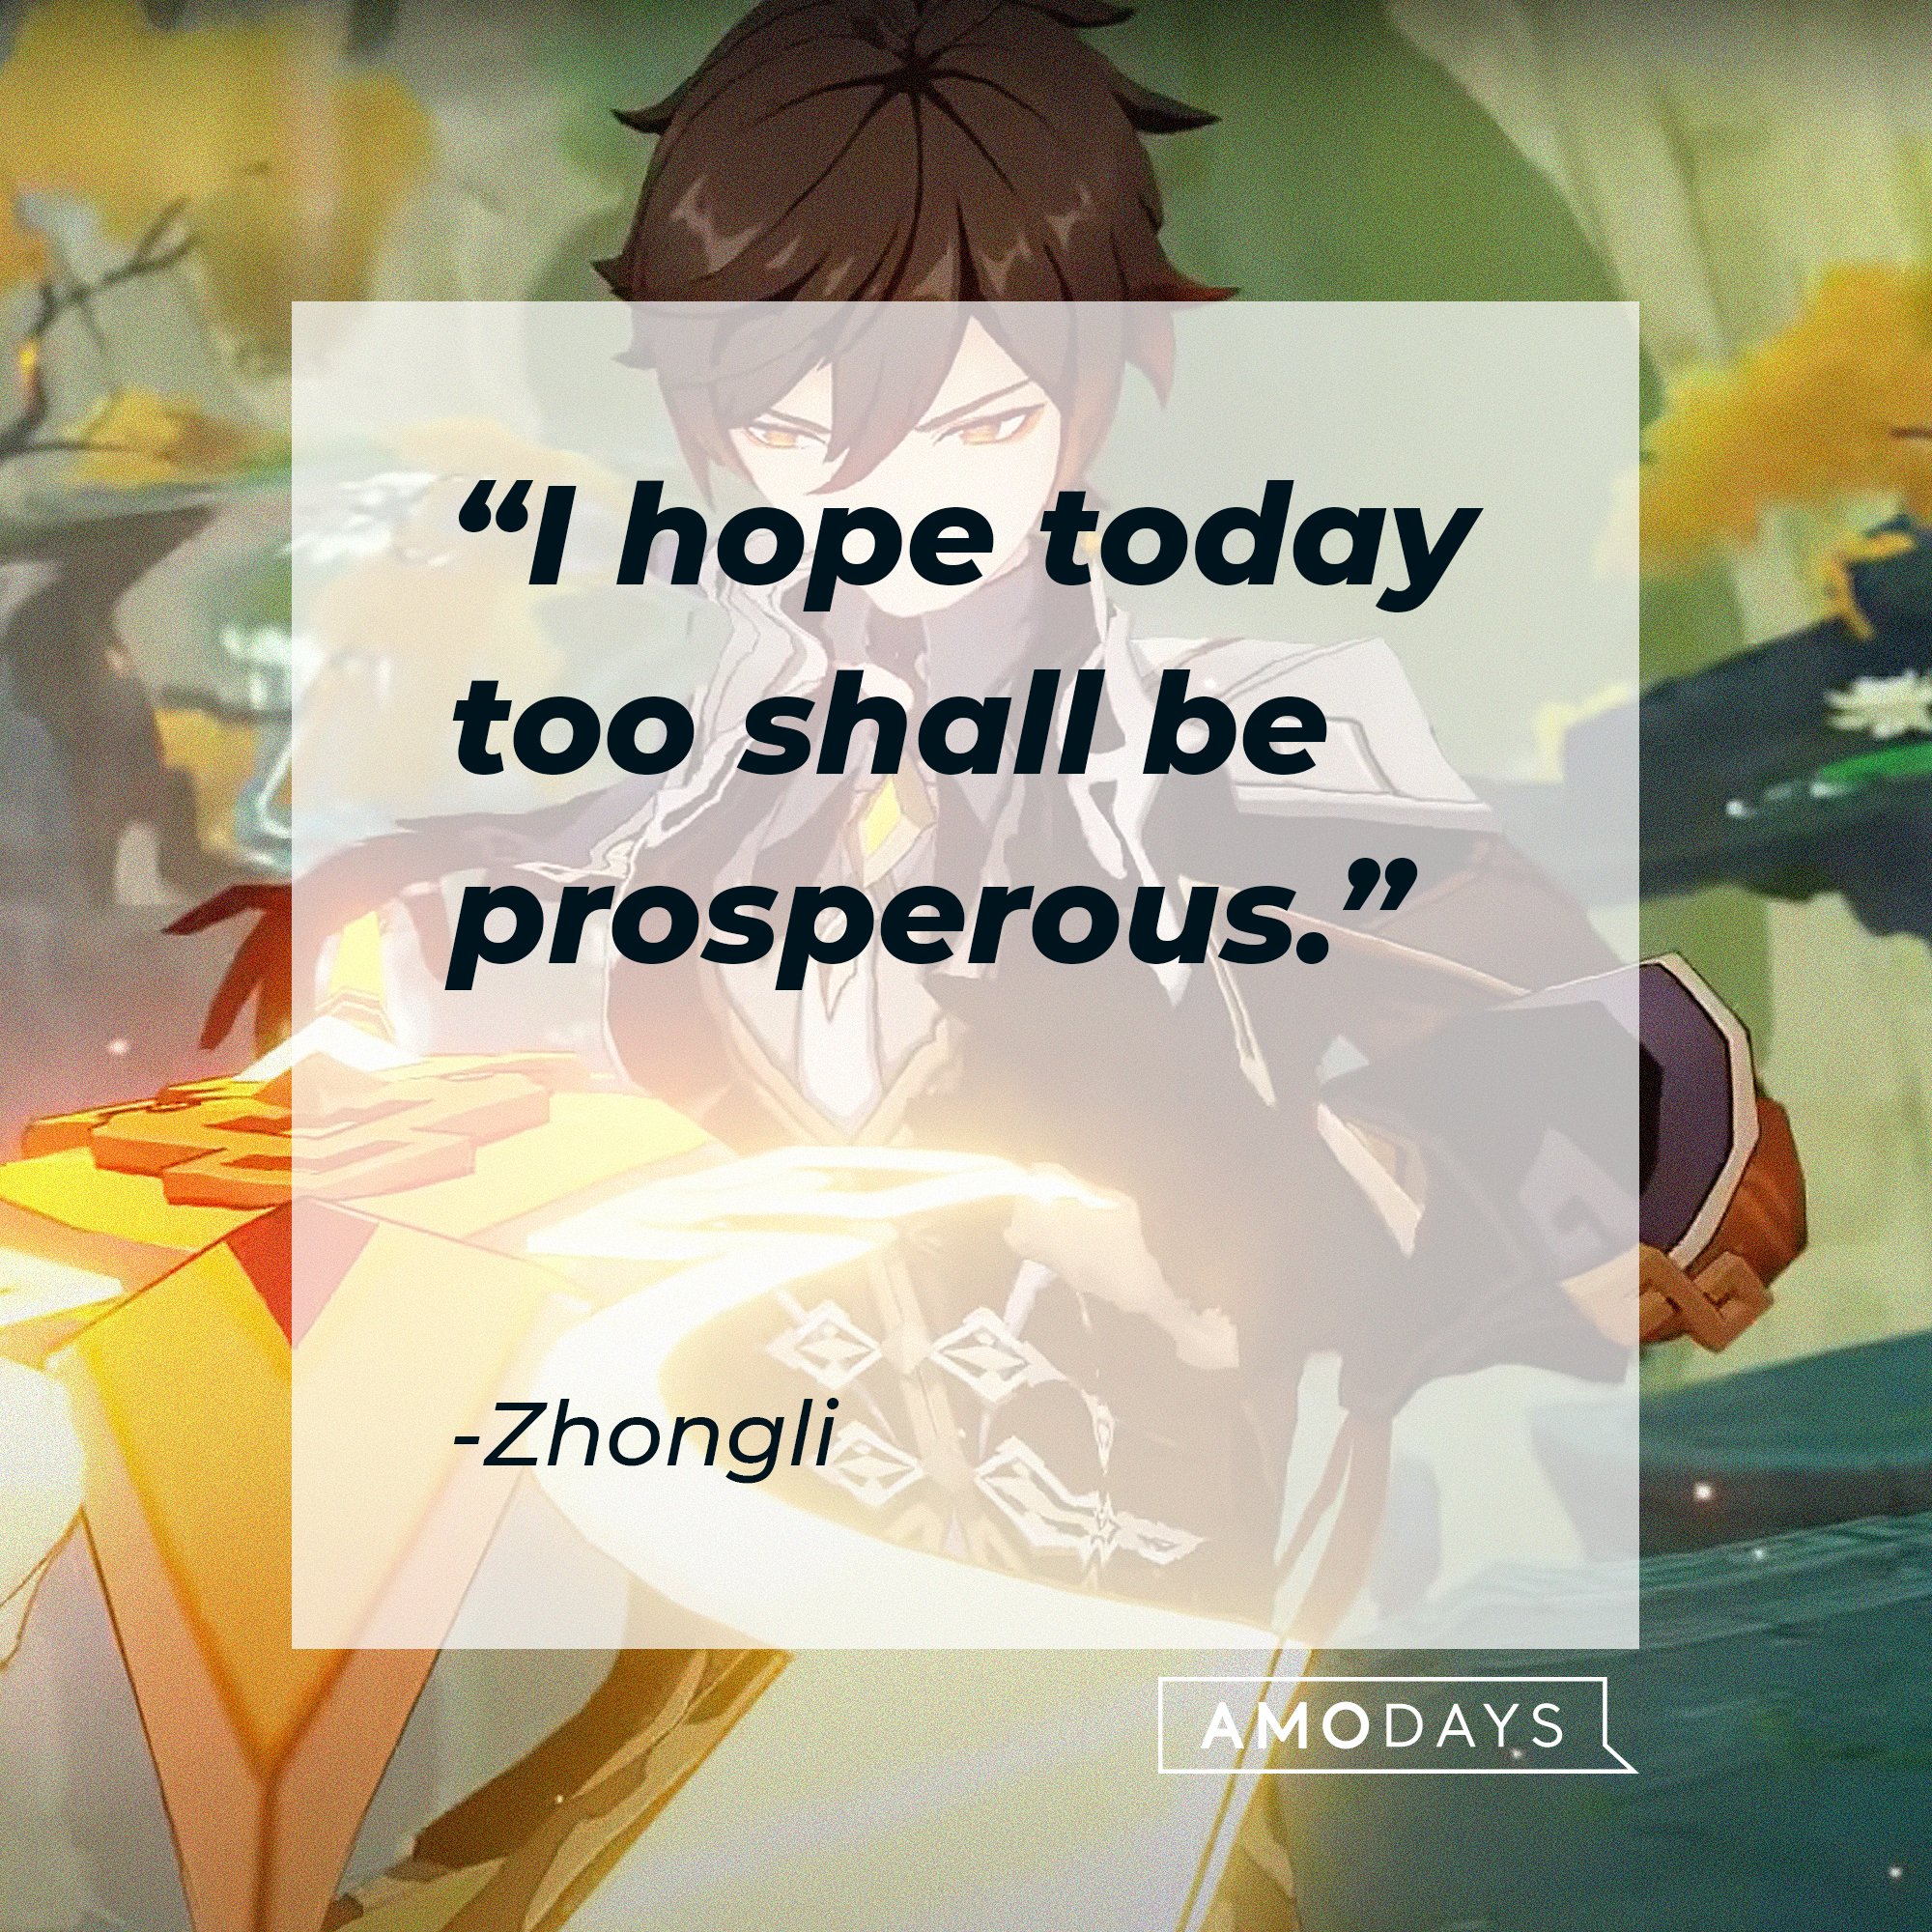 Zhongli’s quote: "I hope today too shall be prosperous." | Image: AmoDays